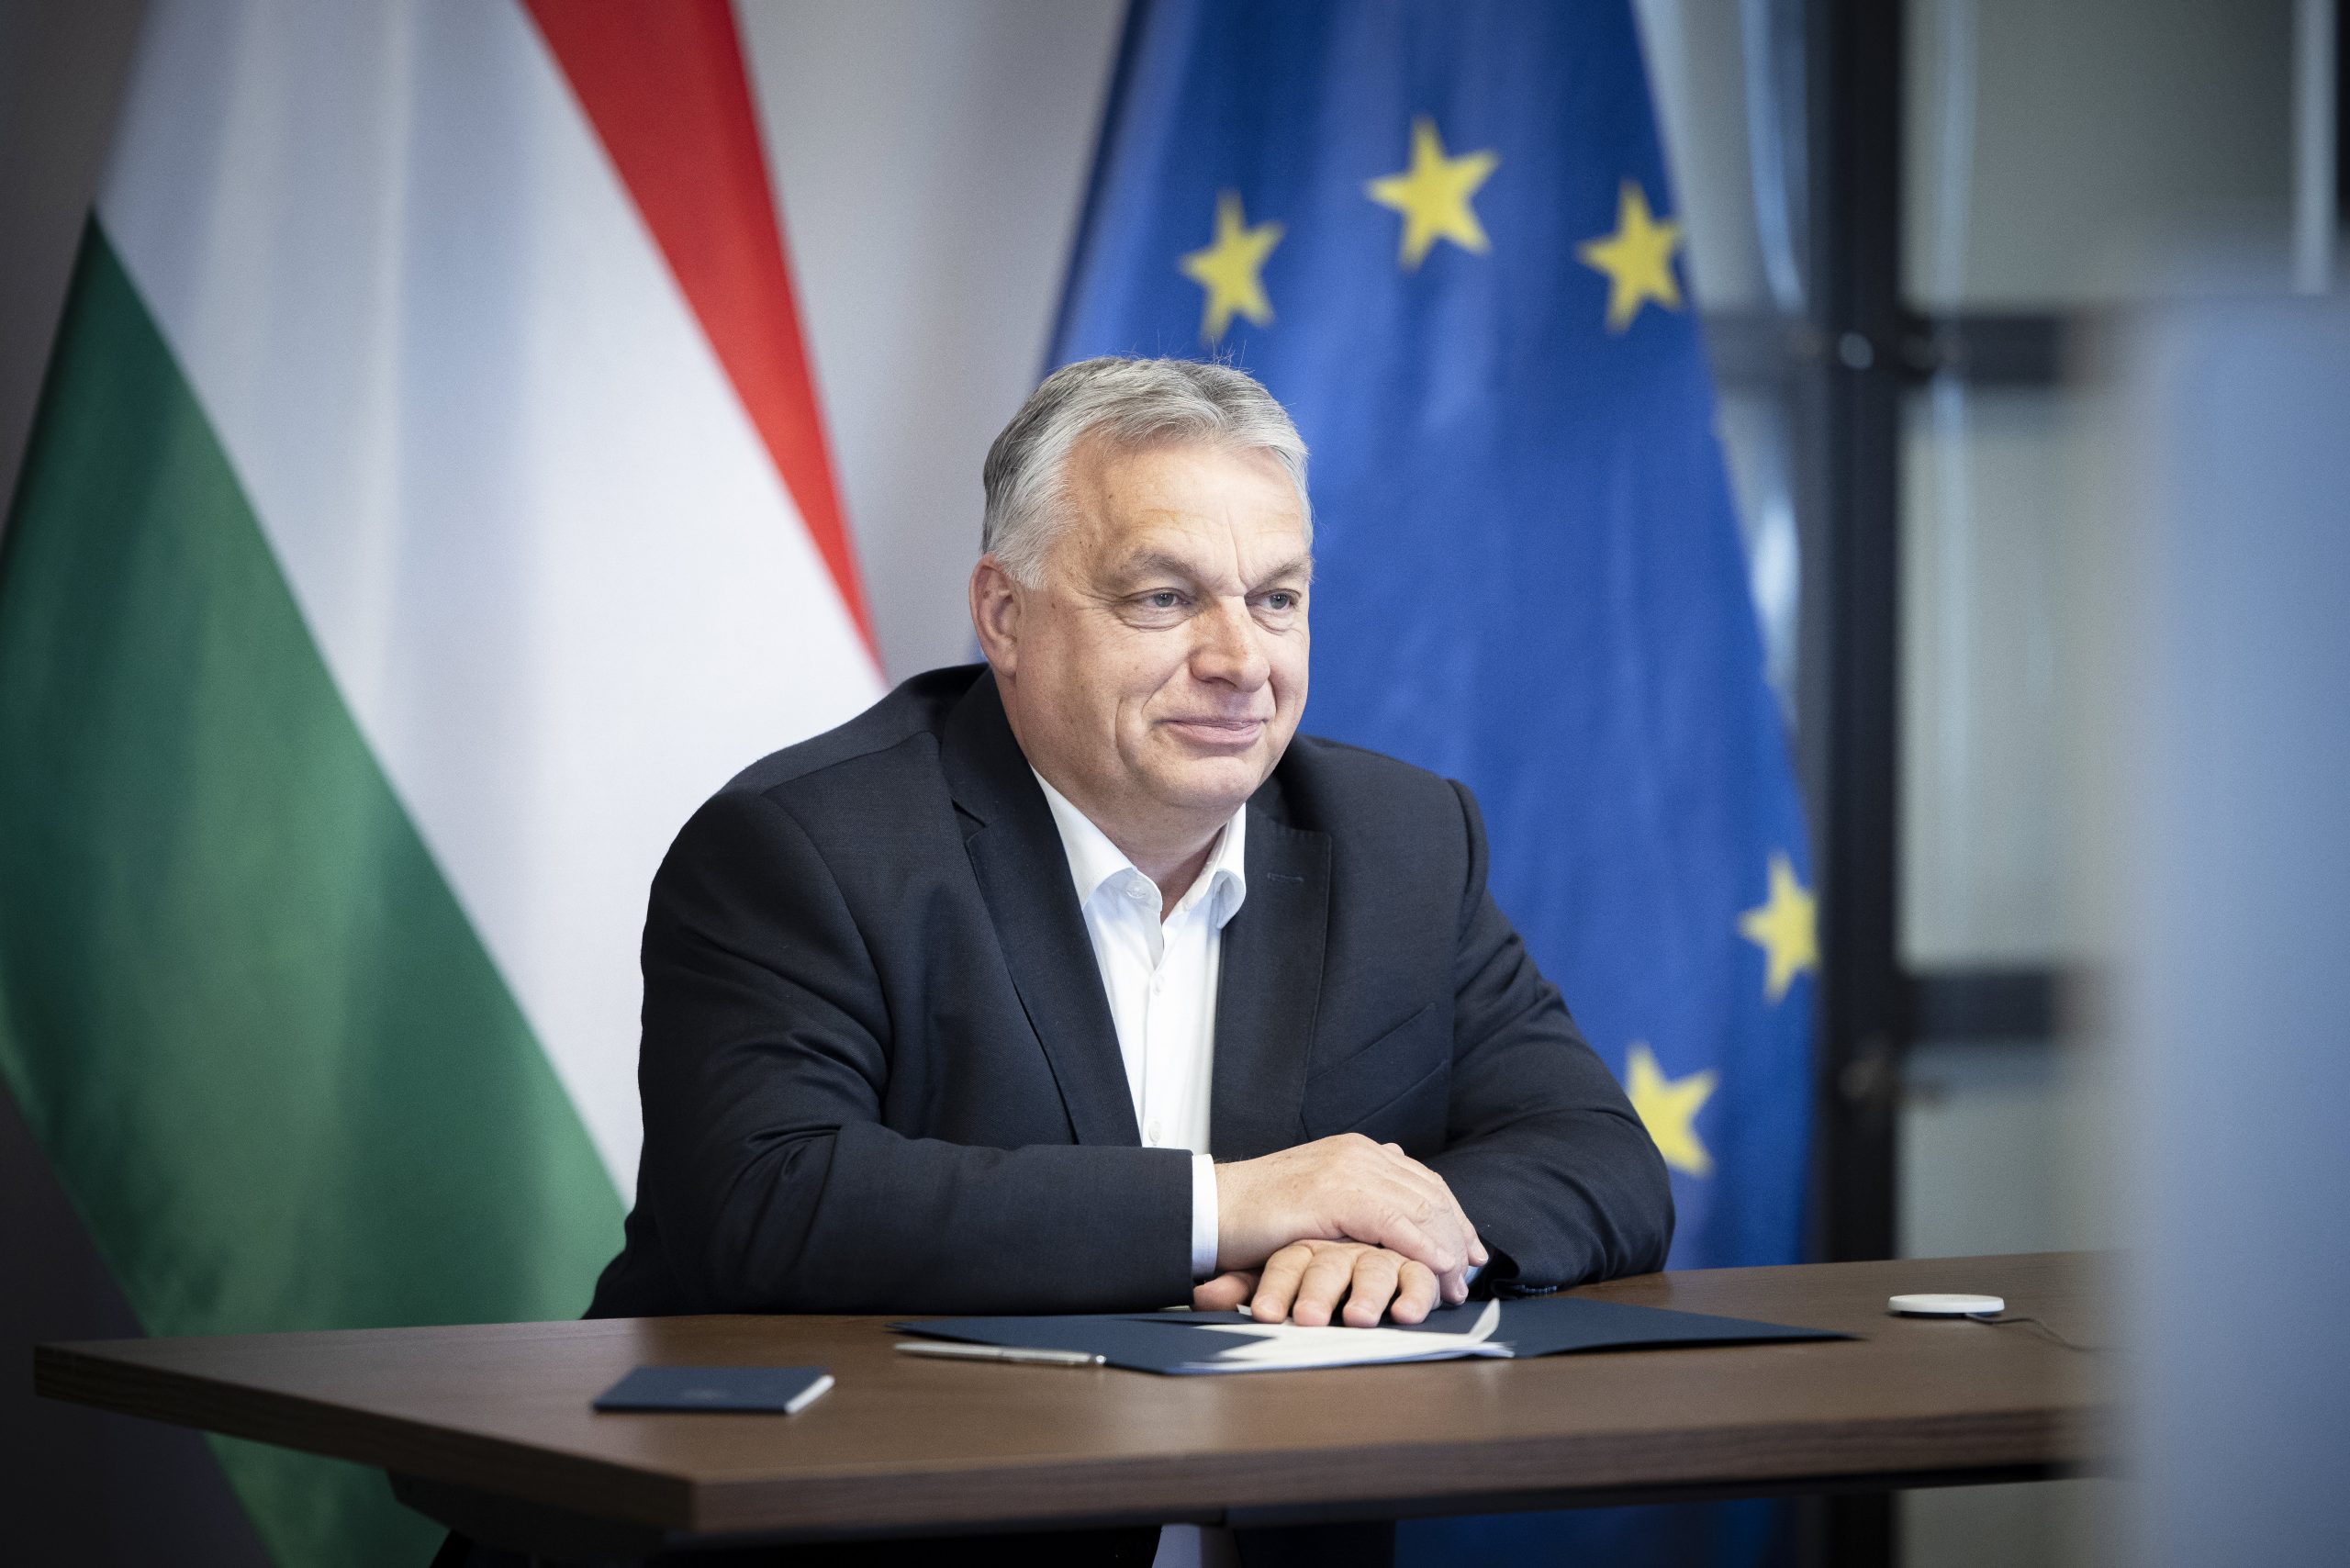 Ukraine Must Not Ignore Rights of Minorities, Viktor Orbán Warns